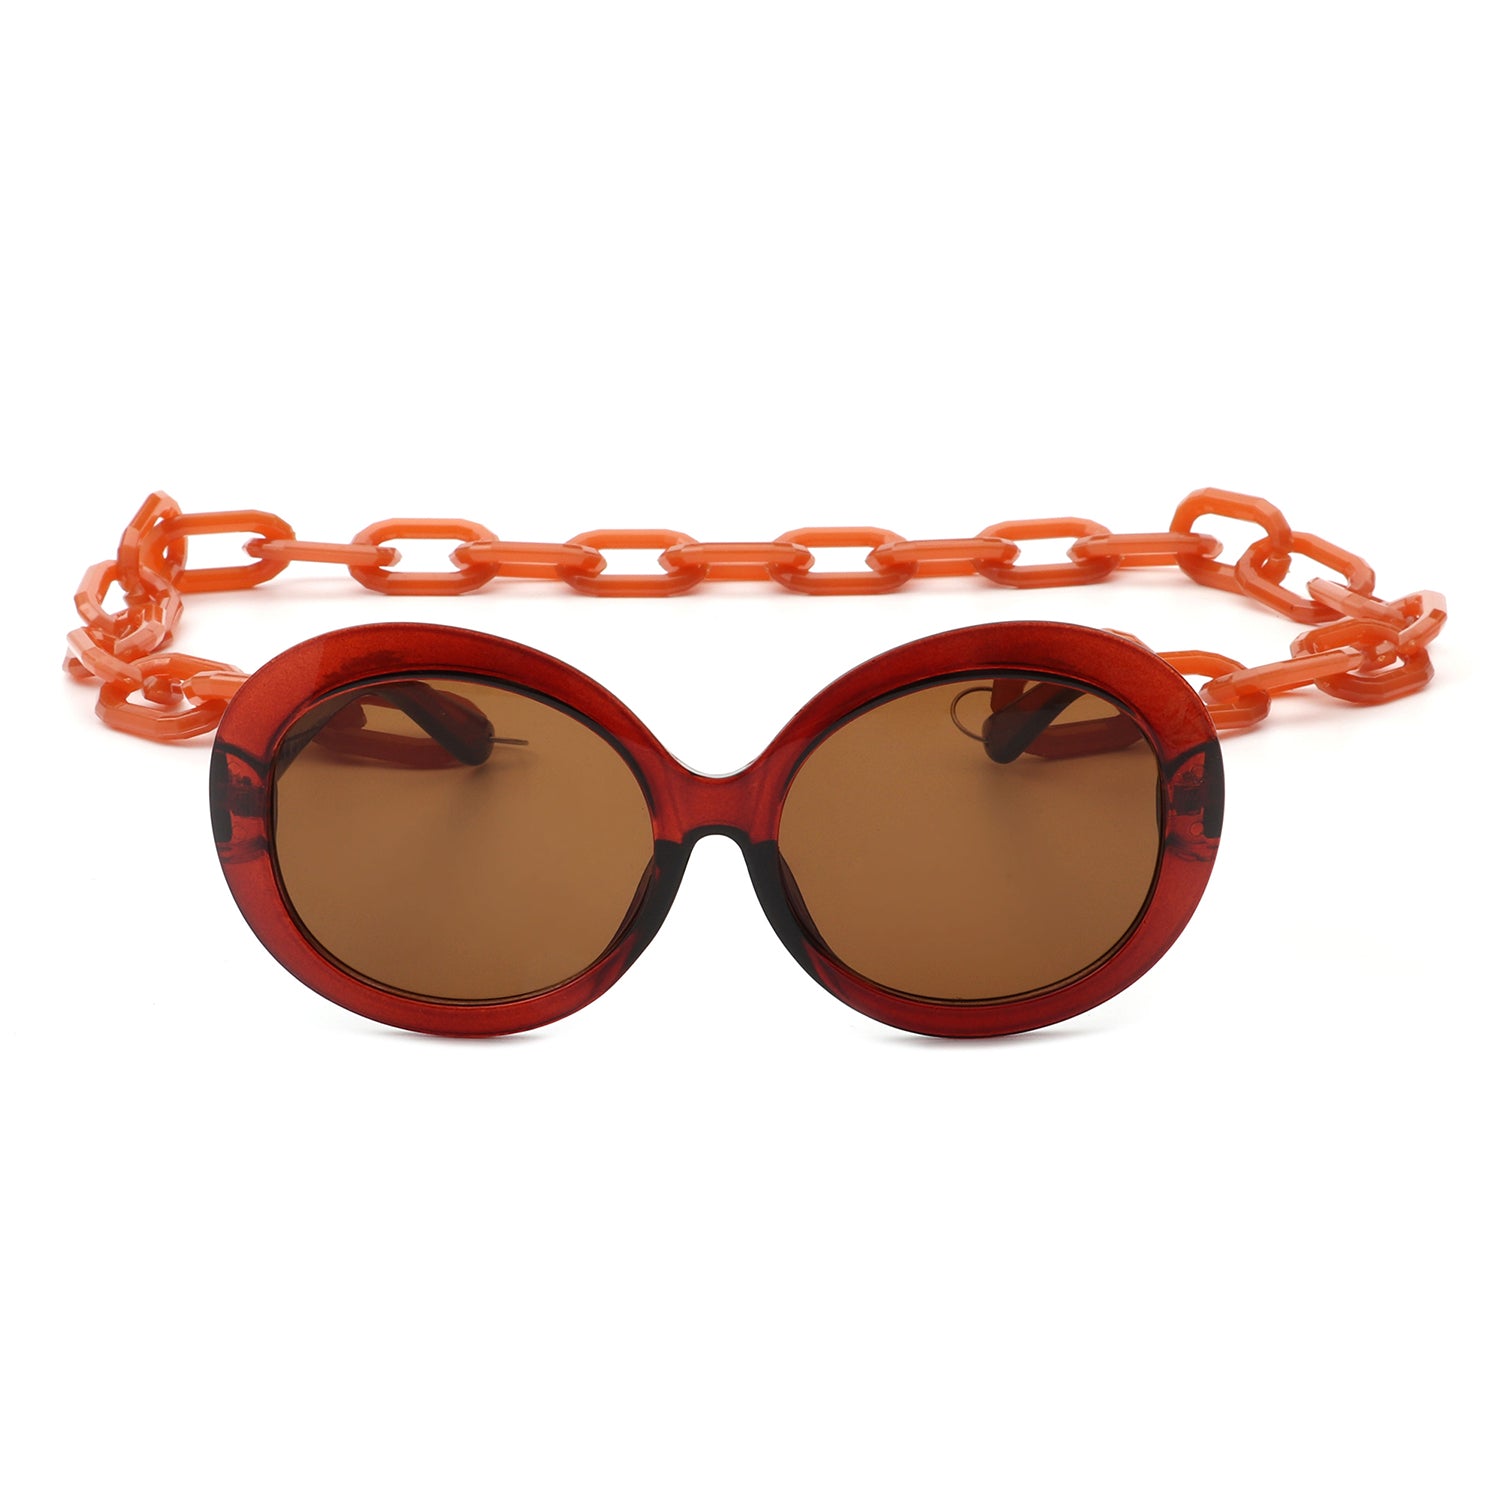 Topshop Chain Round Sunglasses